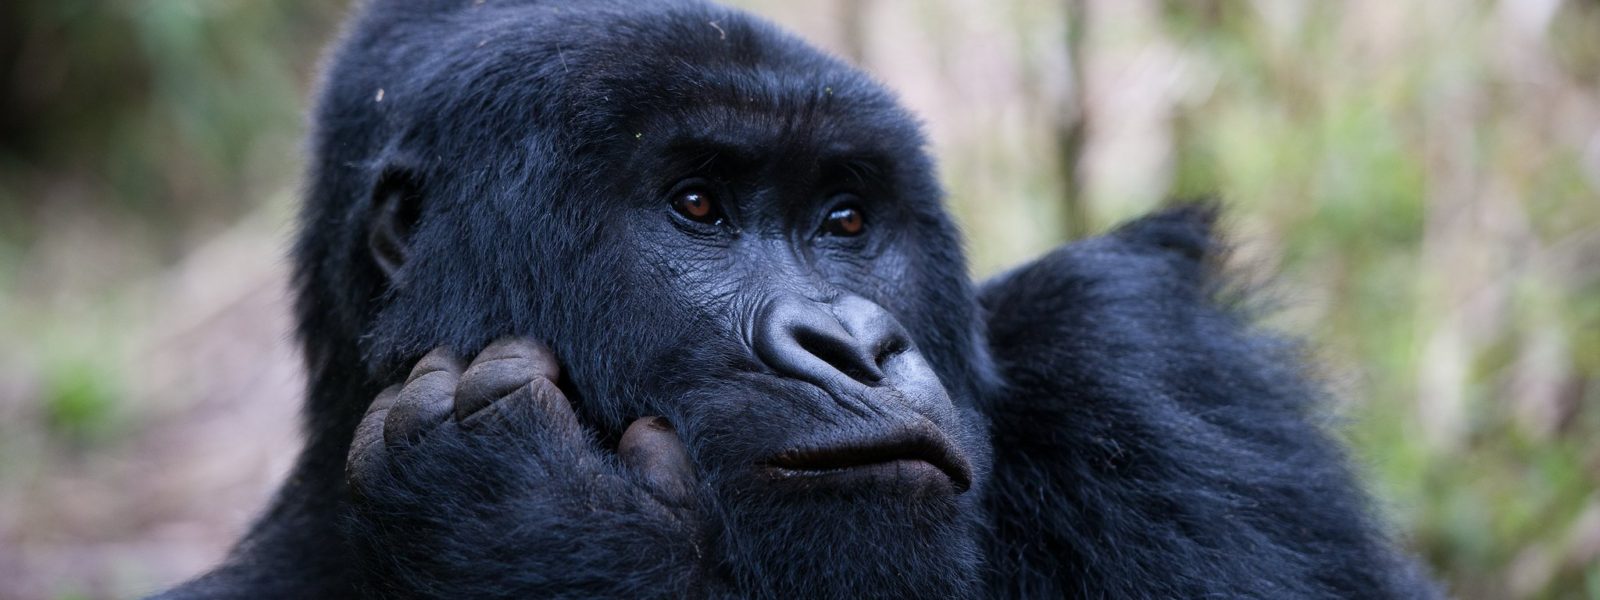 Discounted Gorilla Permits at $400